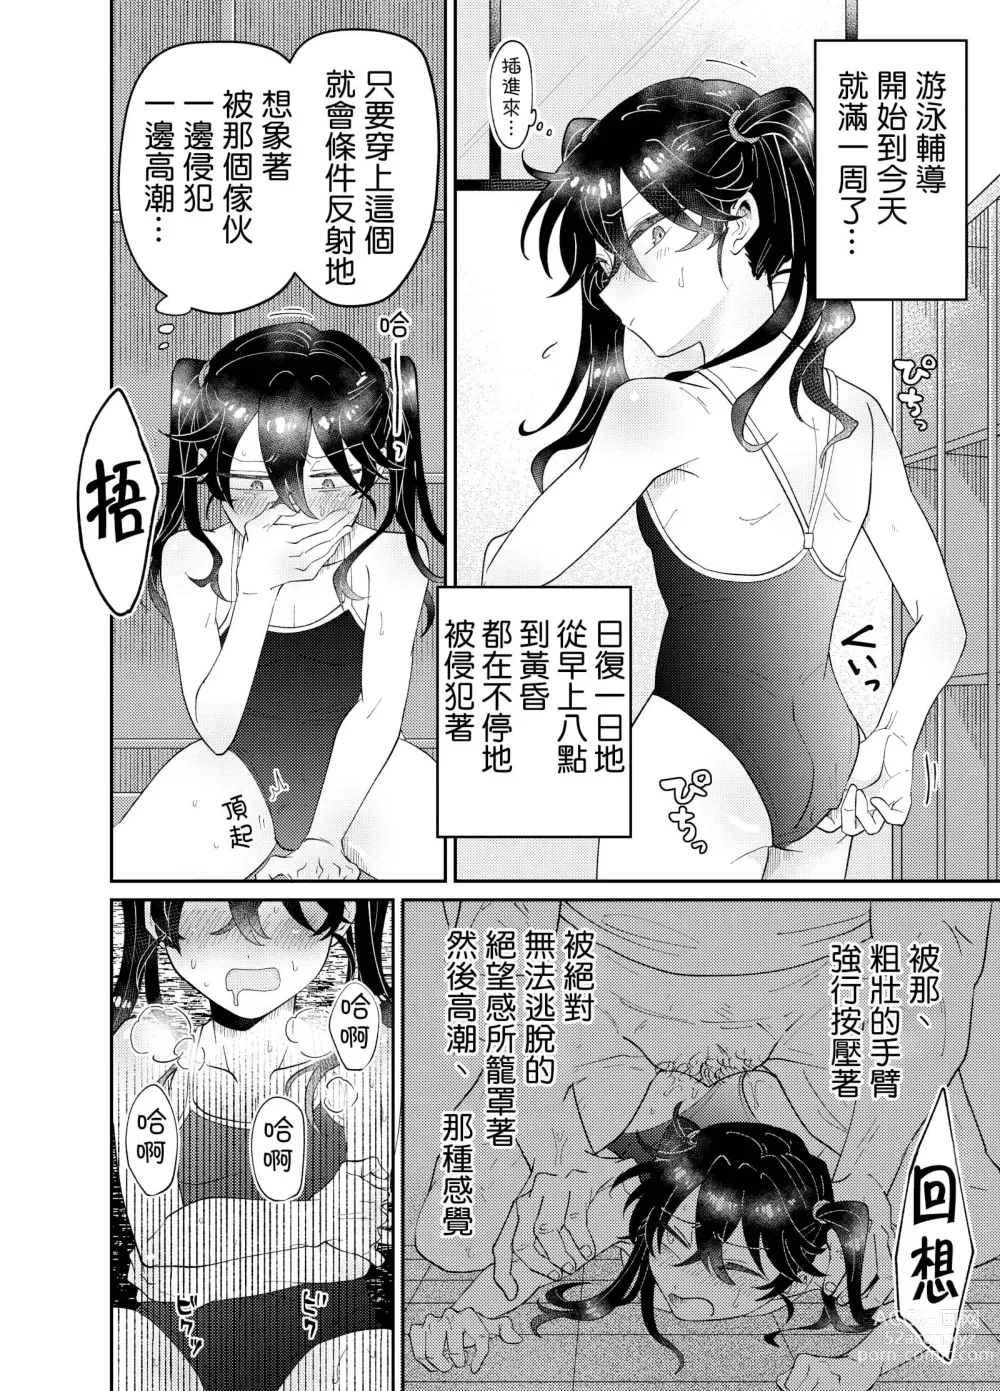 Page 21 of doujinshi 让自以为是的学生穿上死库水进行单独性指导!